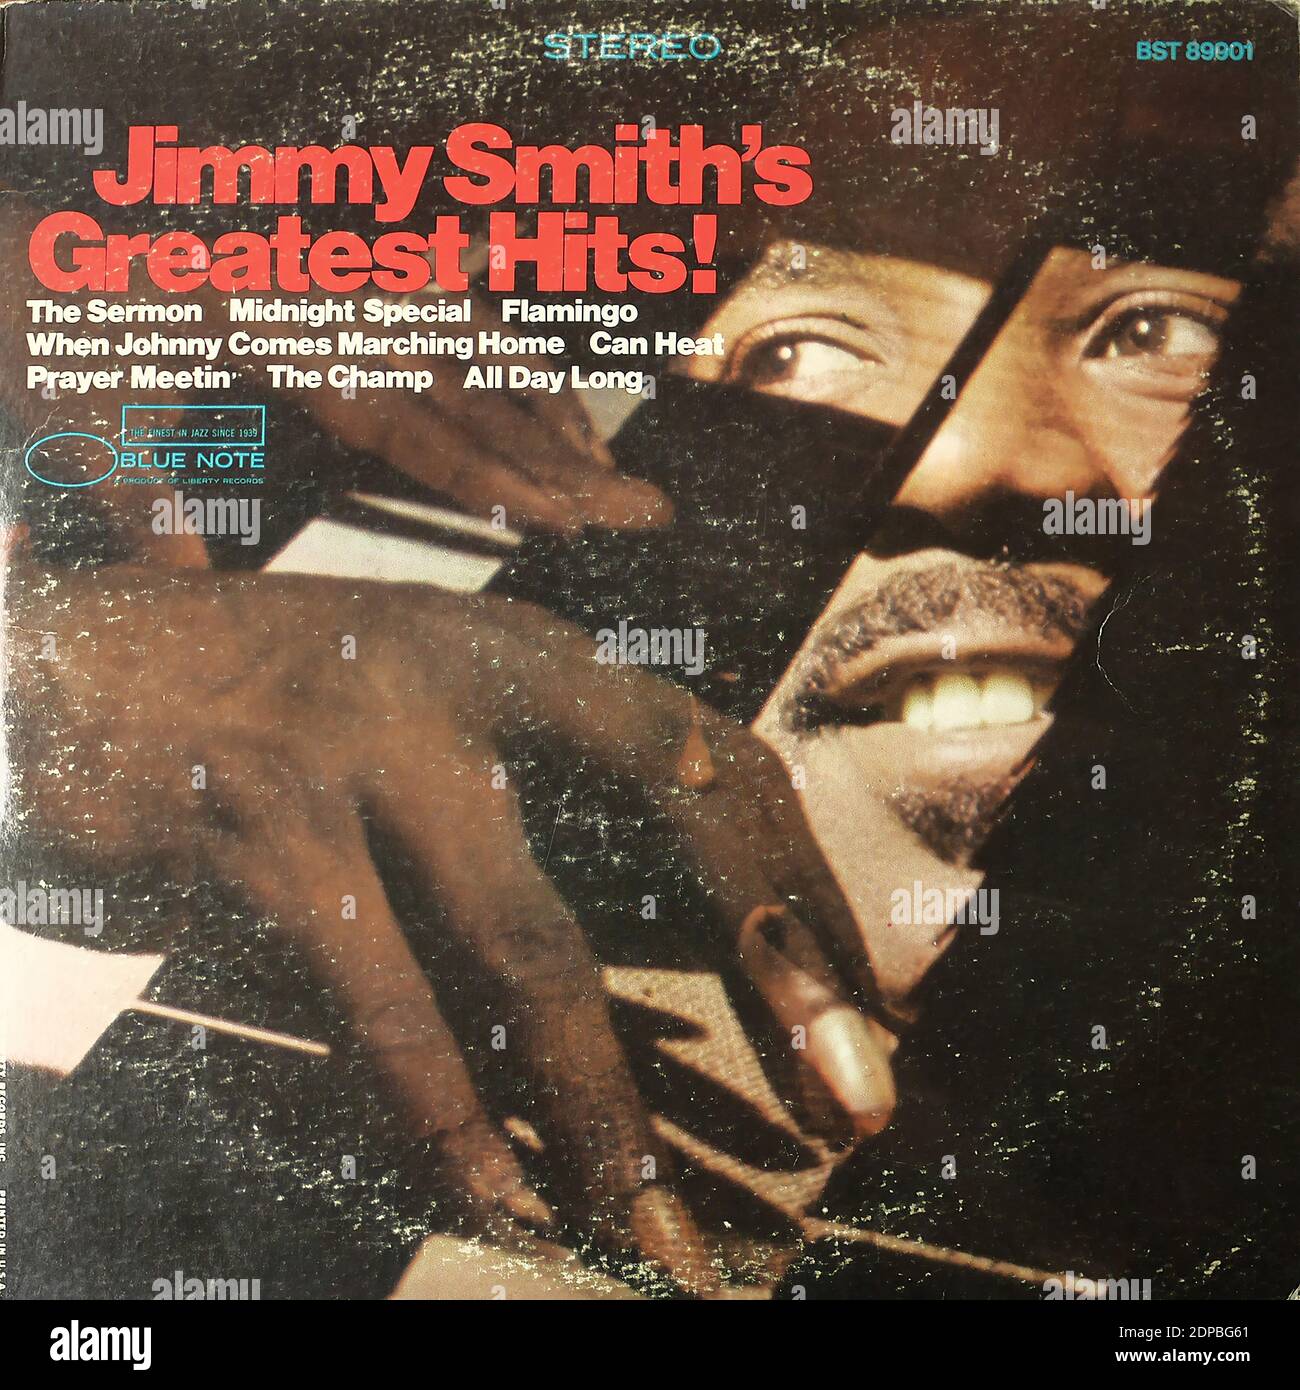 Jimmy Smith's Greatest Hits!, Blue Note BST 89901 - Vintage vinyle album  couverture Photo Stock - Alamy